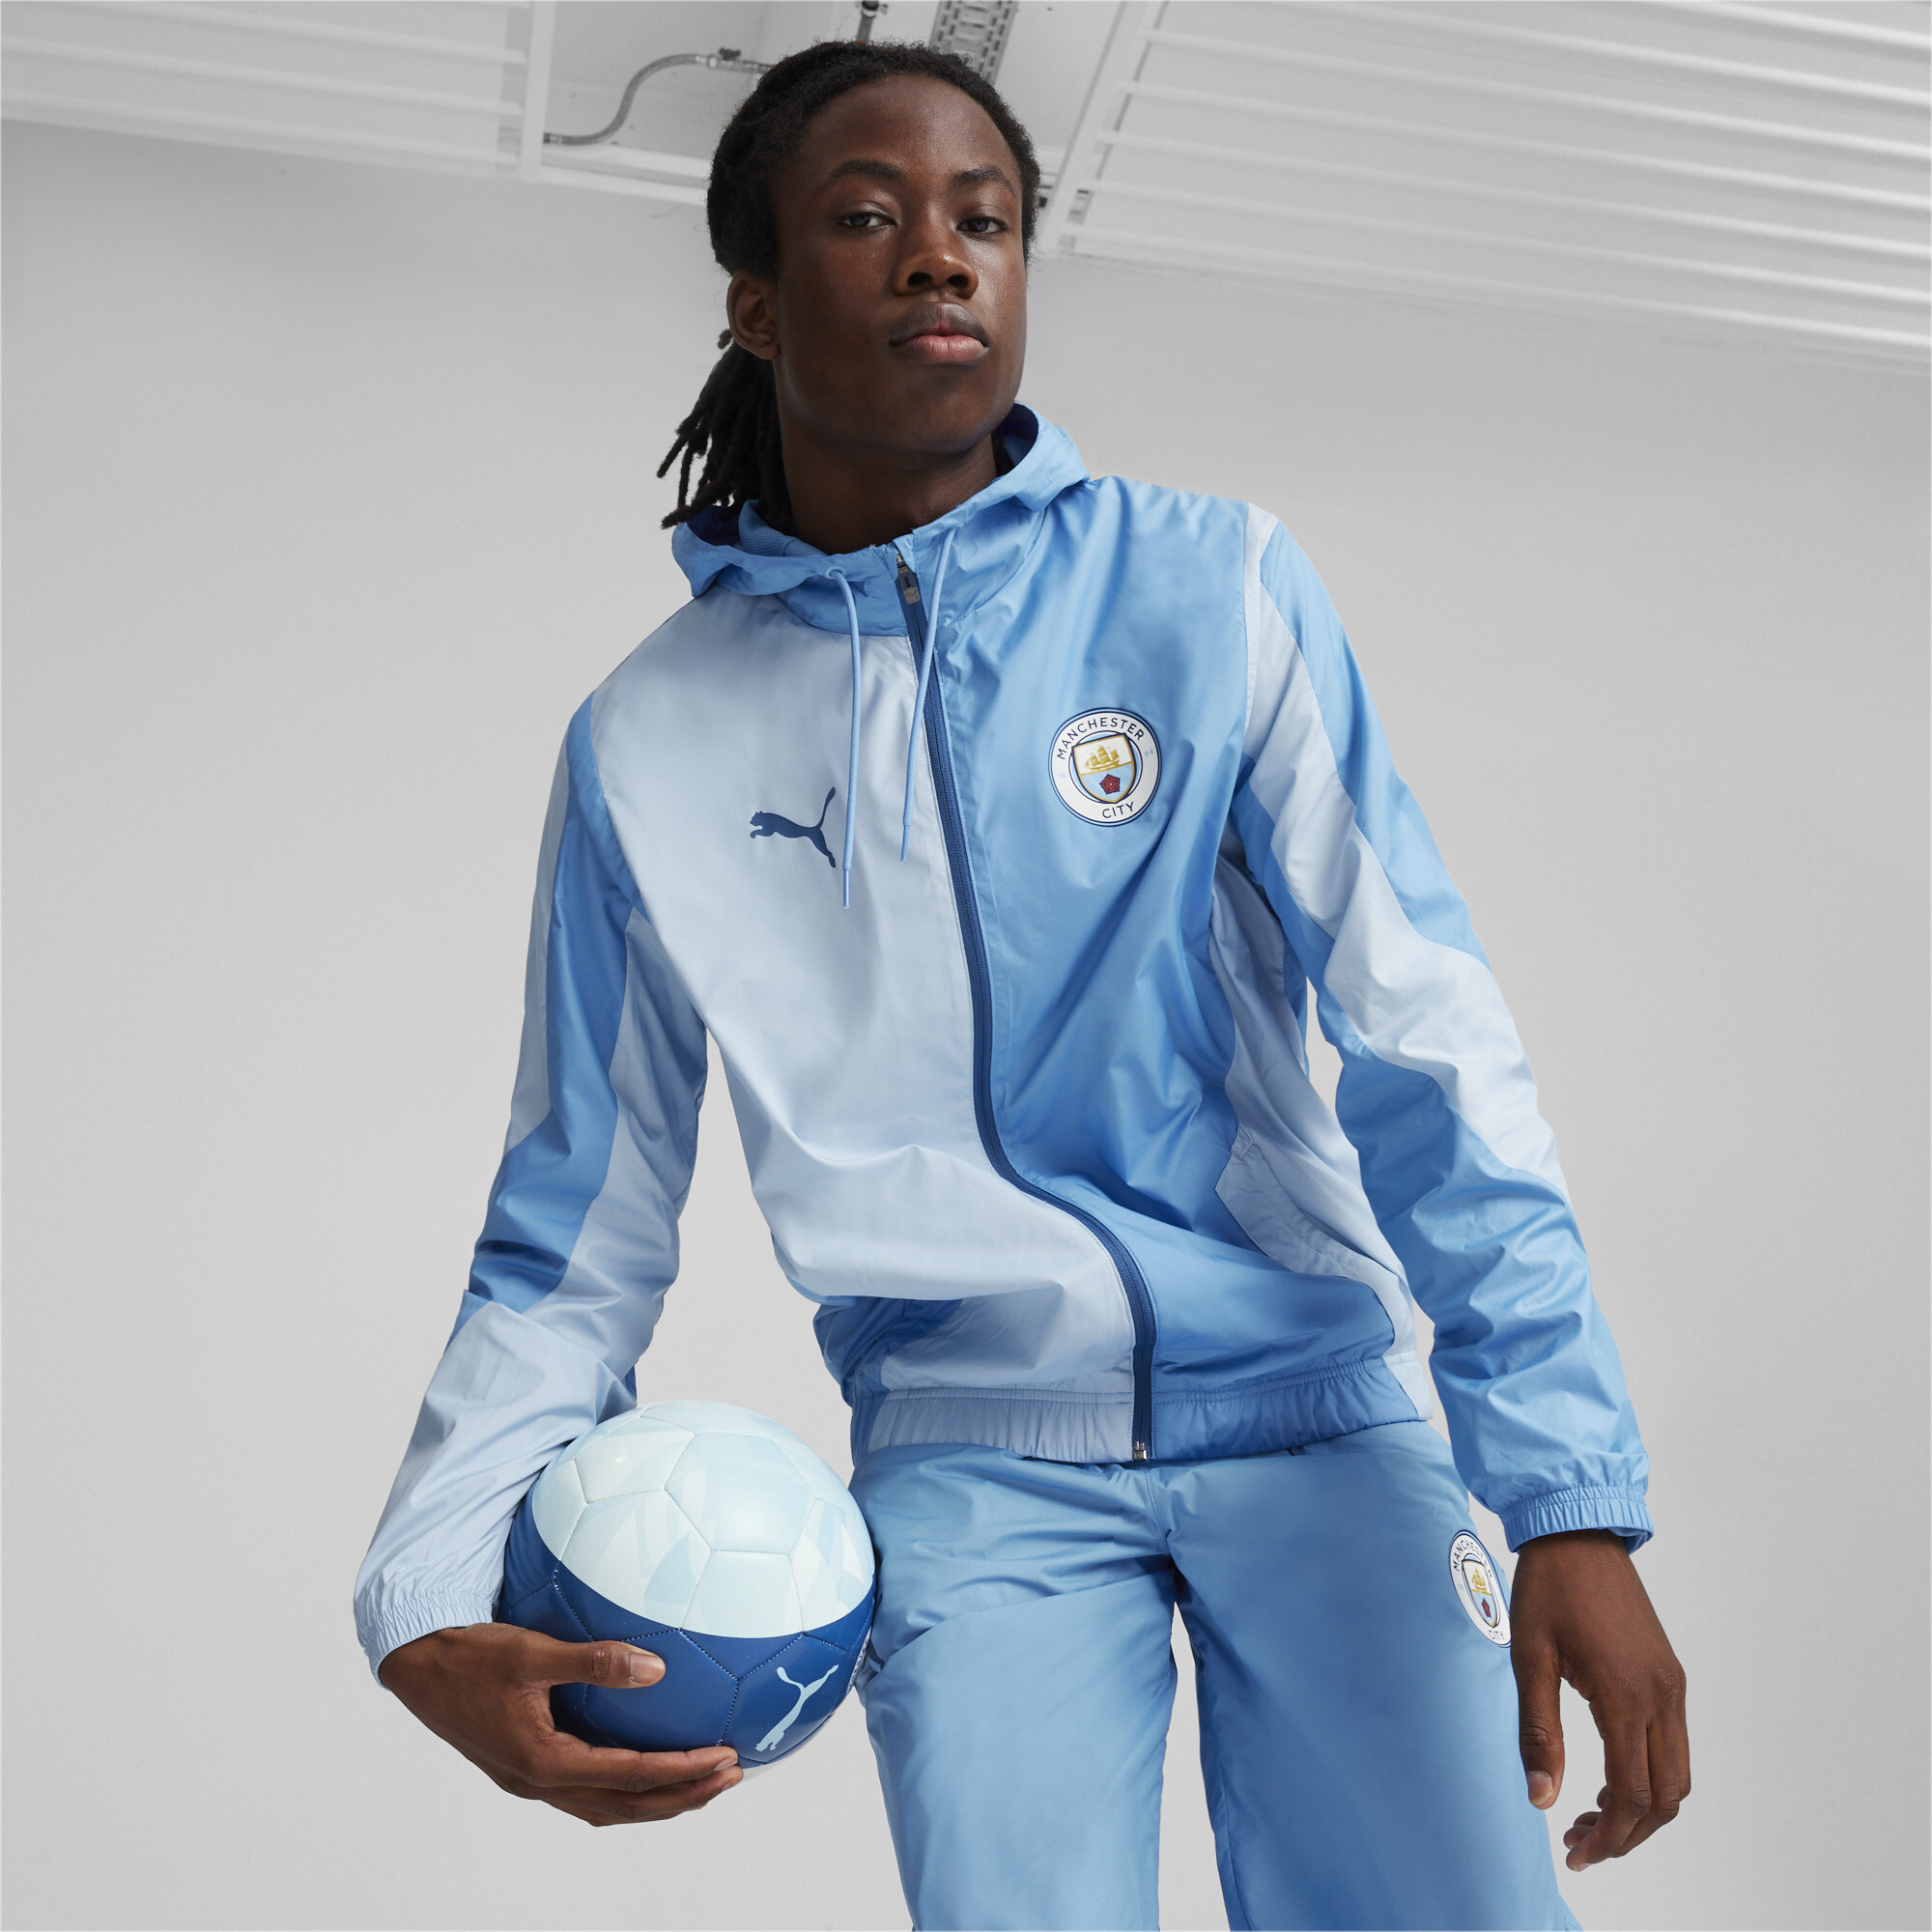 Men's Puma Manchester City Pre-match Jacket, Blue, Size M, Clothing